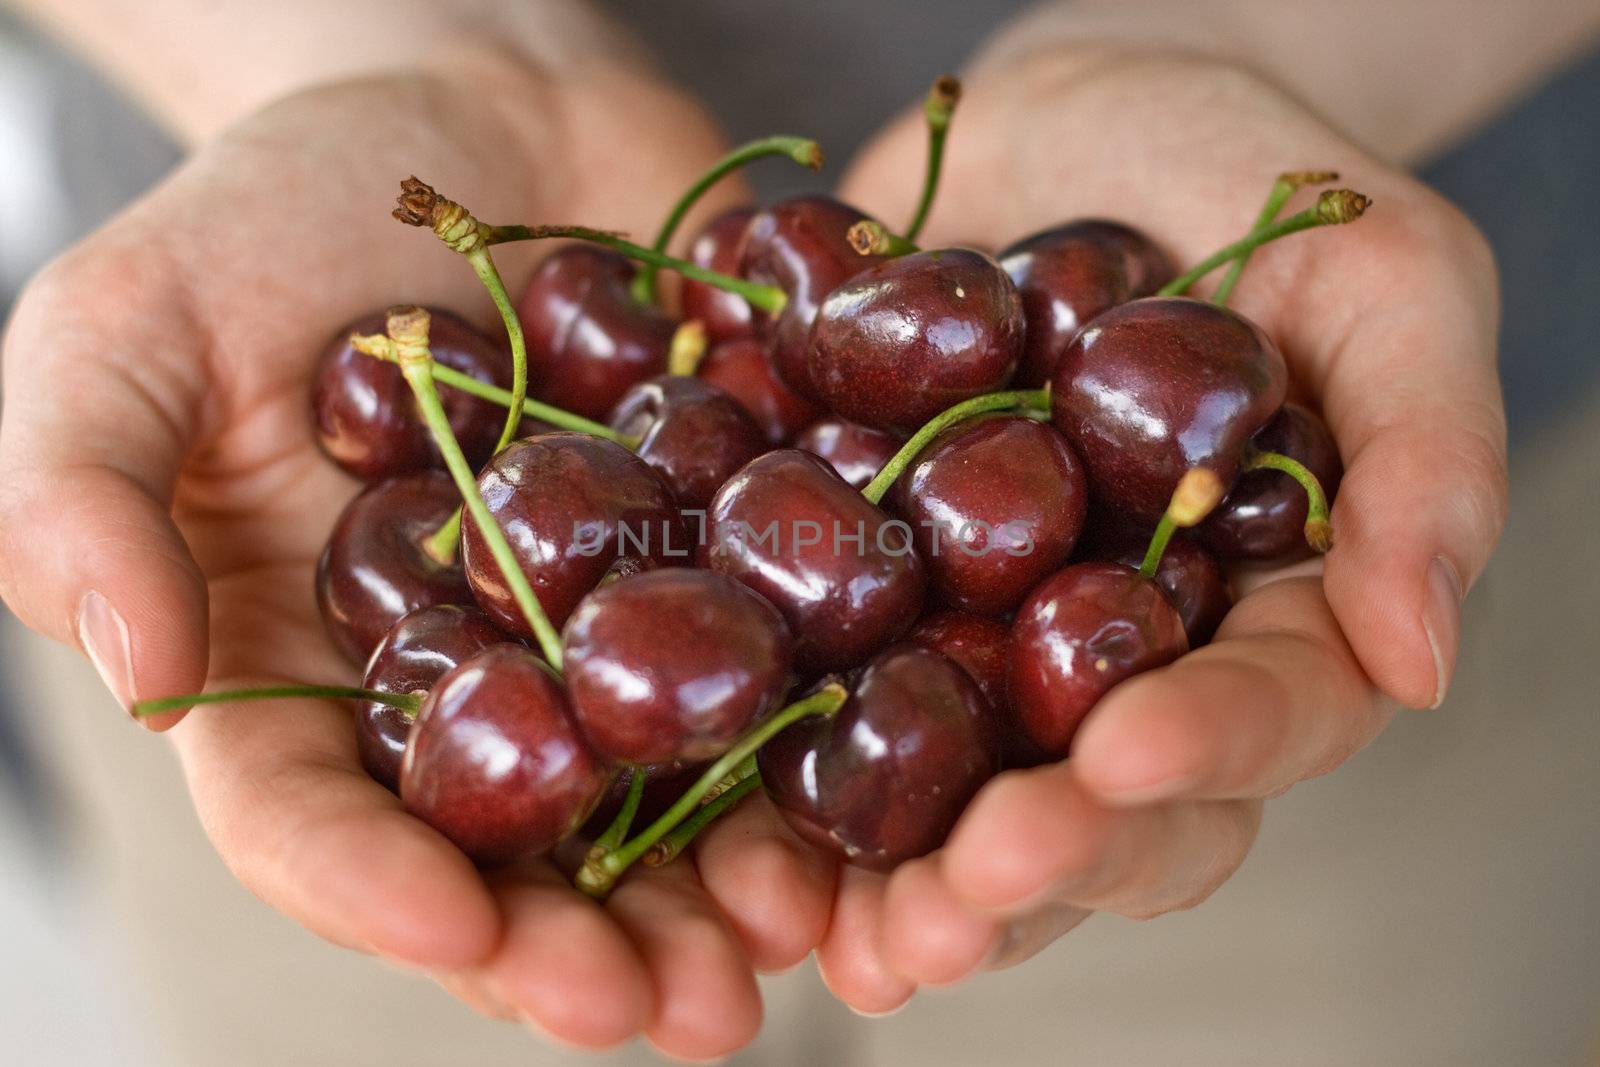 hands full of fresh ripe cherry, shallow DOF